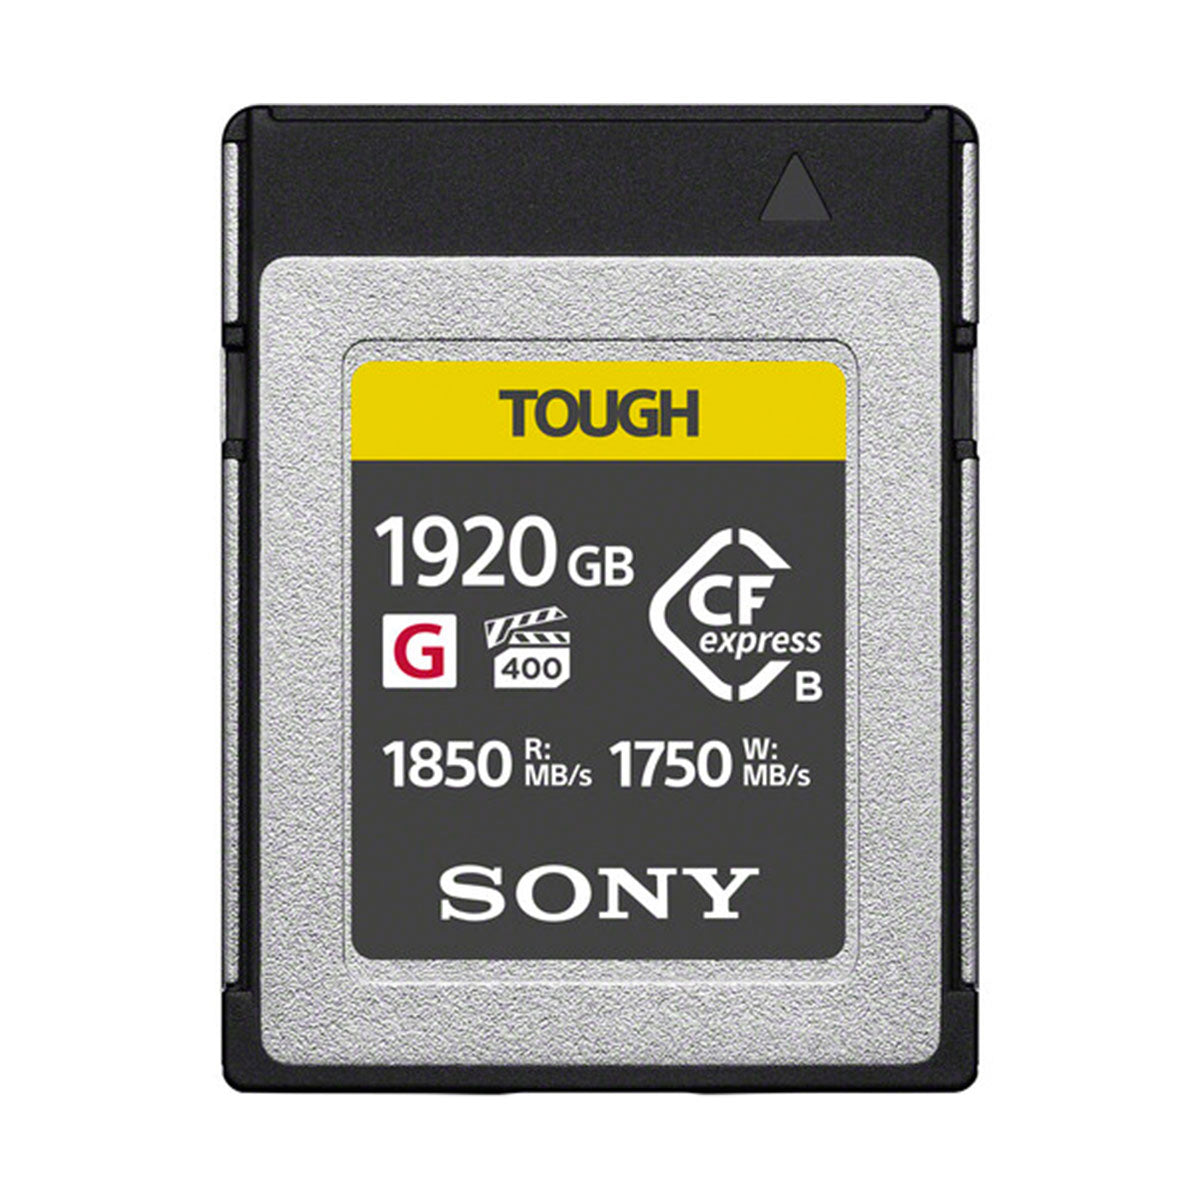 Sony 1920GB CFexpress Type B TOUGH Memory Card